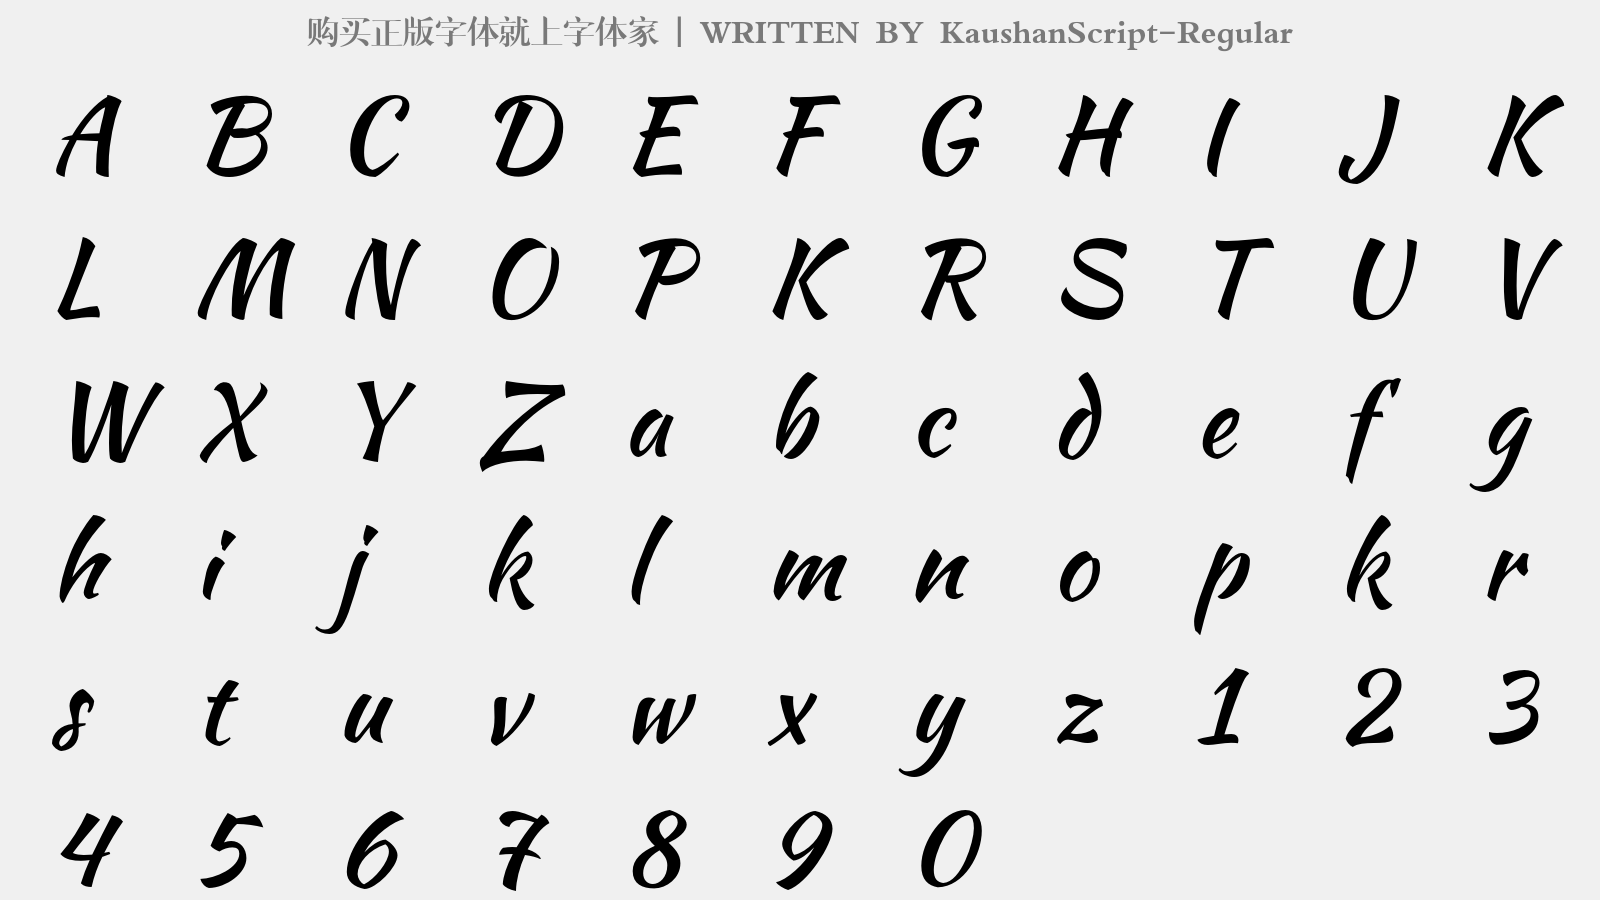 KaushanScript-Regular - 大写字母/小写字母/数字